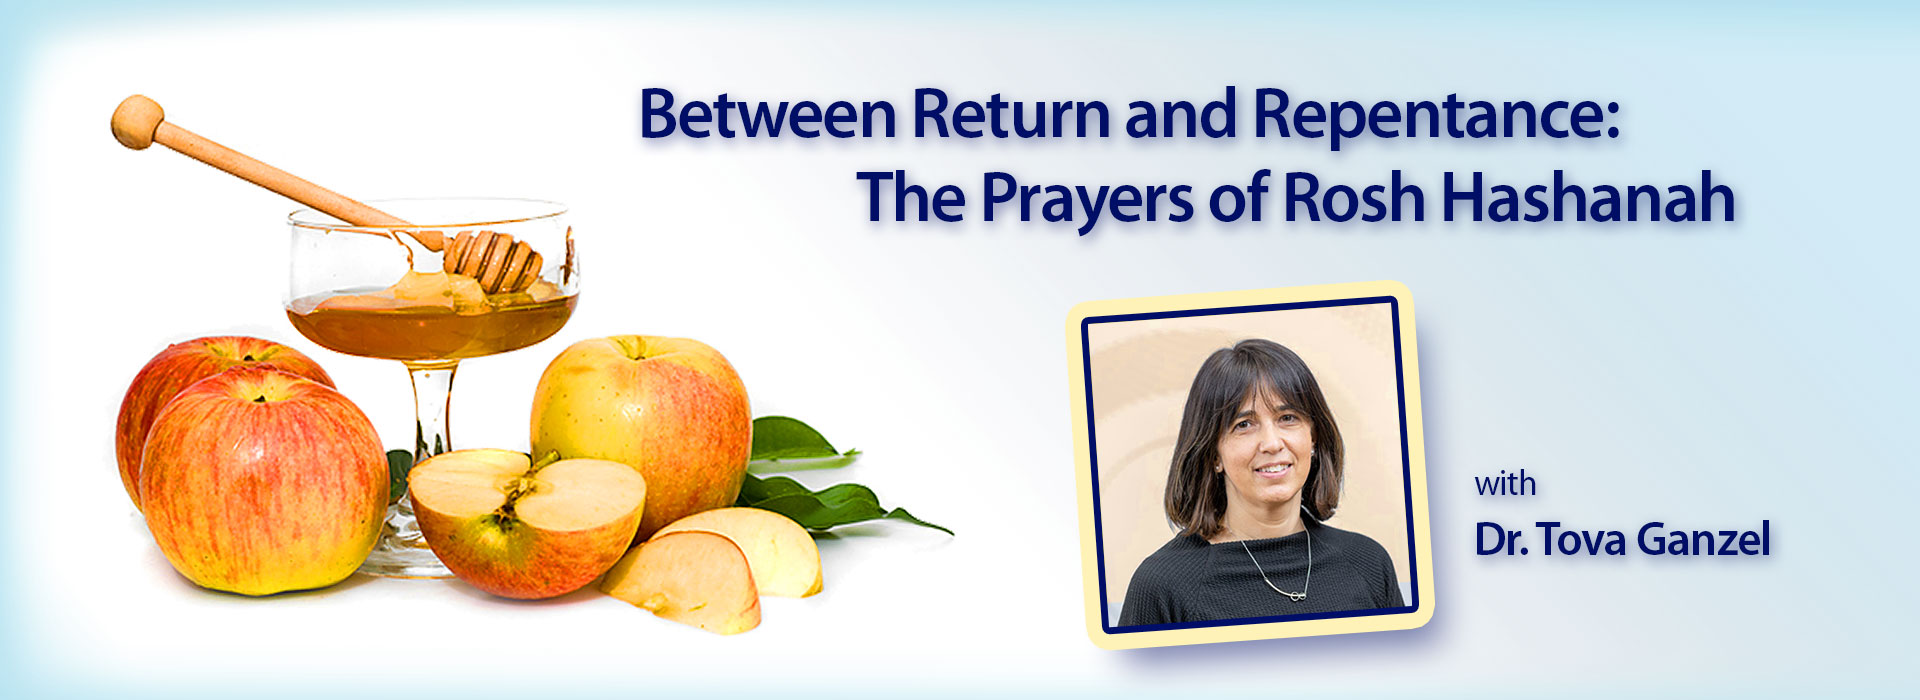 Between Return and Repentance: The Prayers of Rosh Hashanah